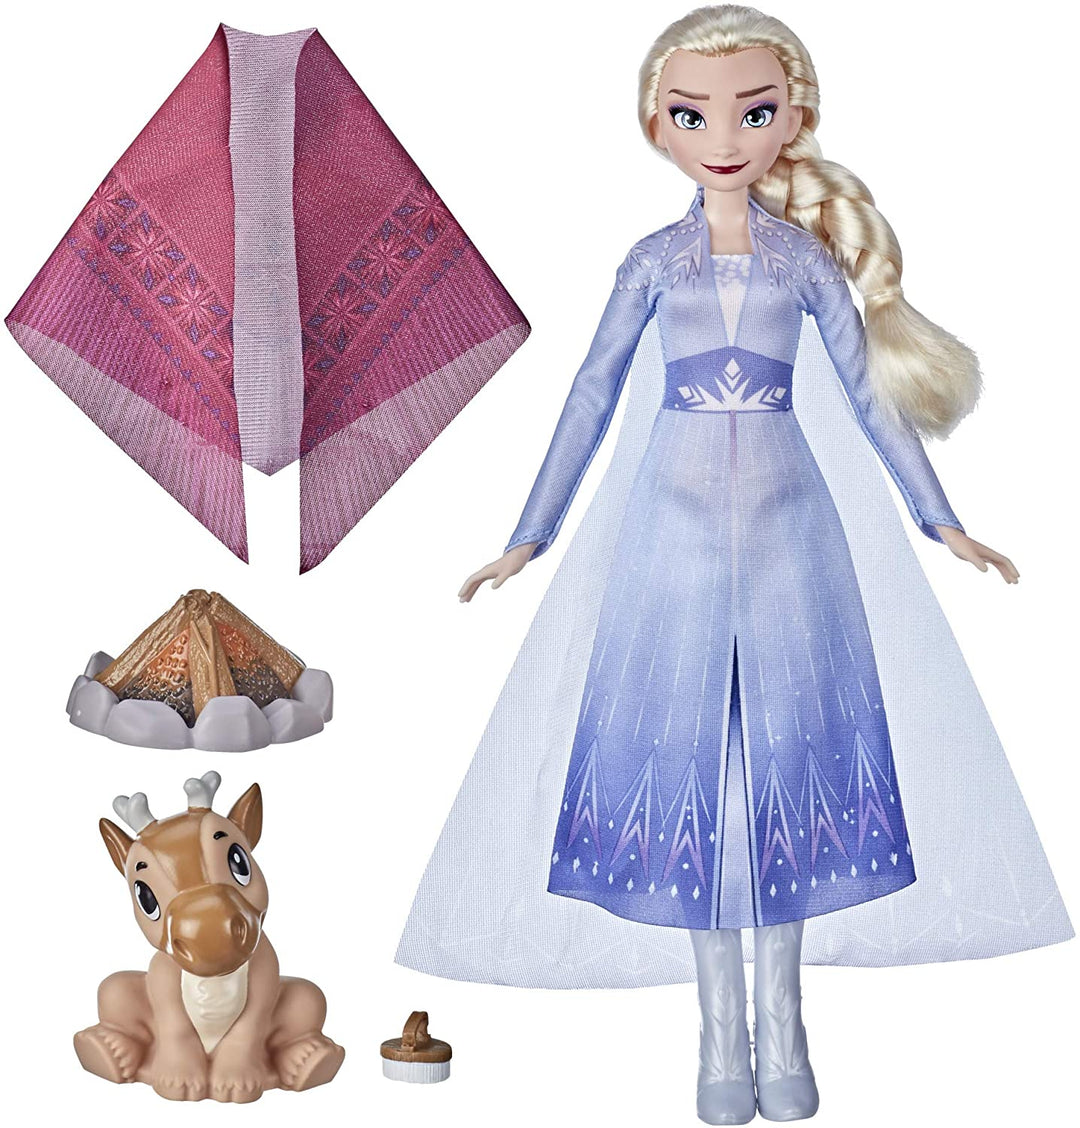 Frozen 2 Elsa&#39;s kampvuurvrienden